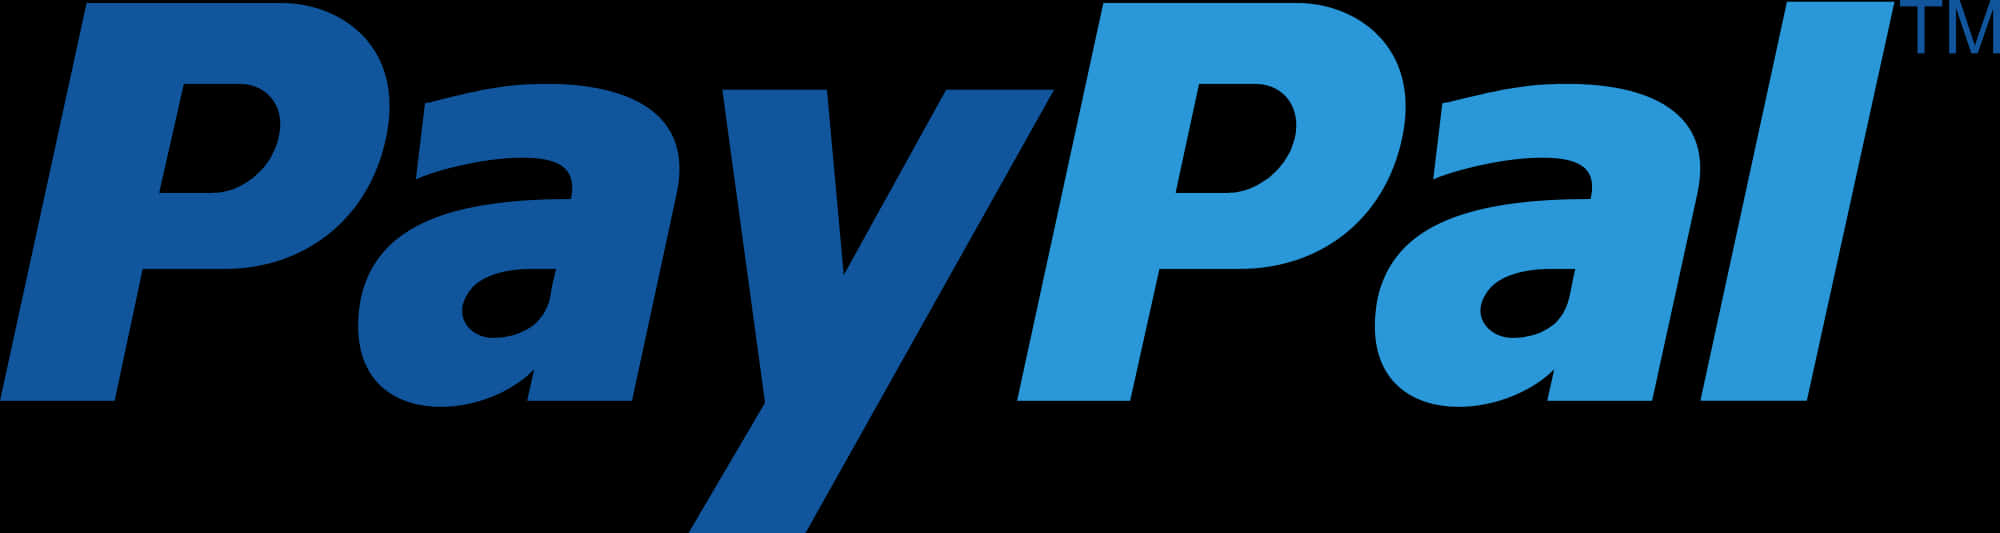 Pay Pal Logo Blueand Black PNG image